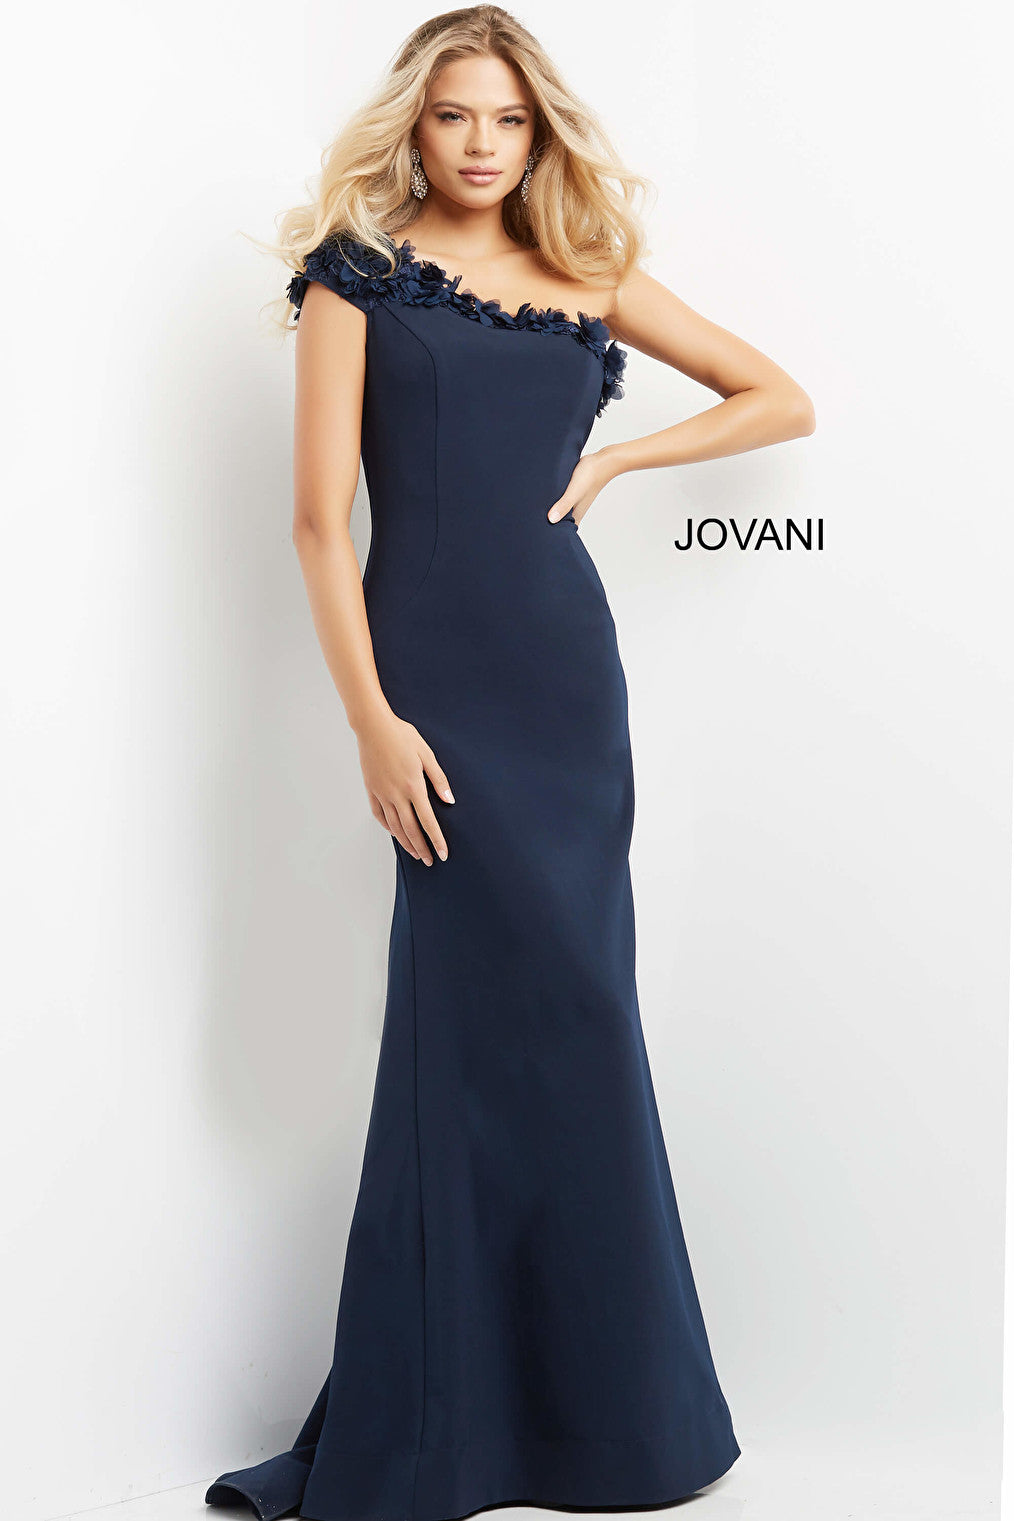 Jovani 06589 Navy One Shoulder Sheath Evening Dress